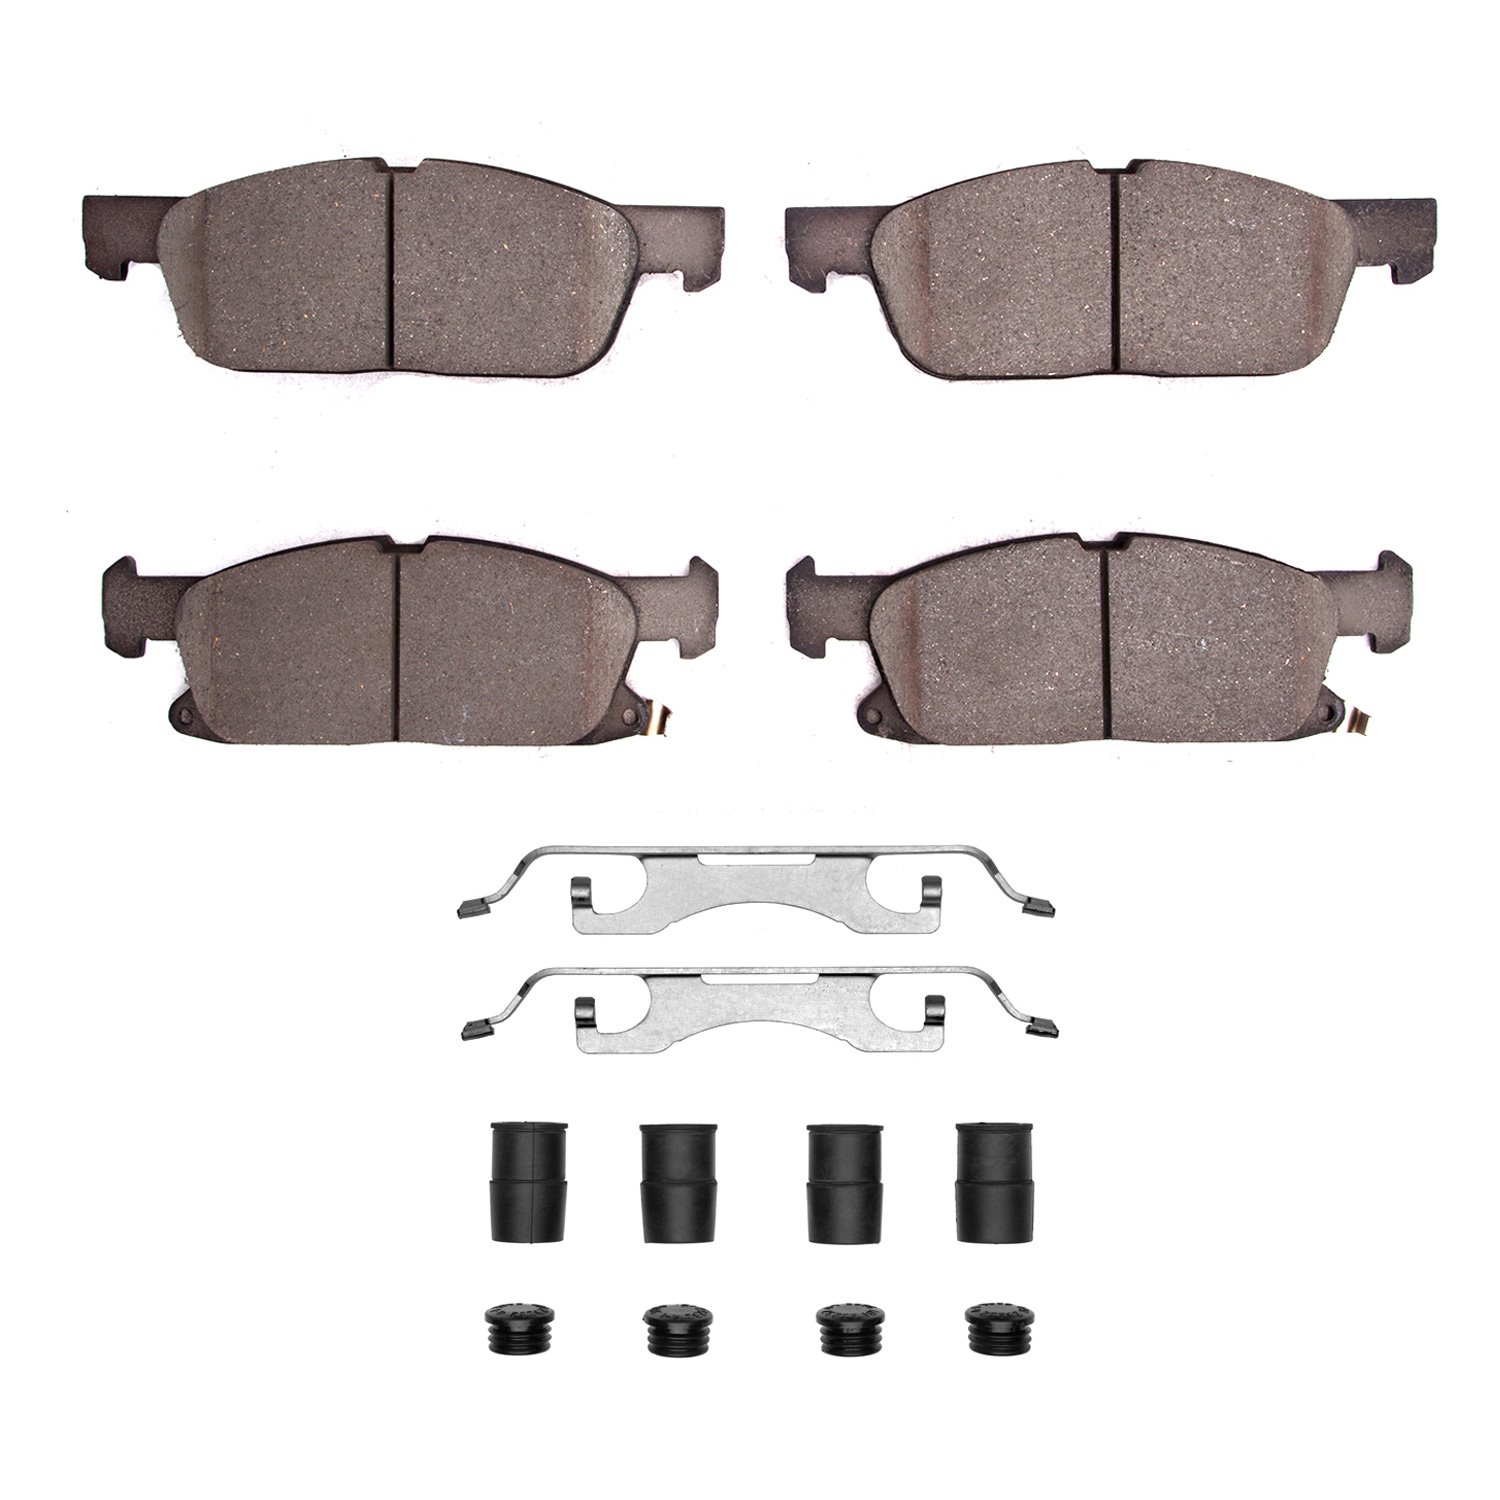 1551-1818-01 5000 Advanced Ceramic Brake Pads & Hardware Kit, 2015-2020 Ford/Lincoln/Mercury/Mazda, Position: Front